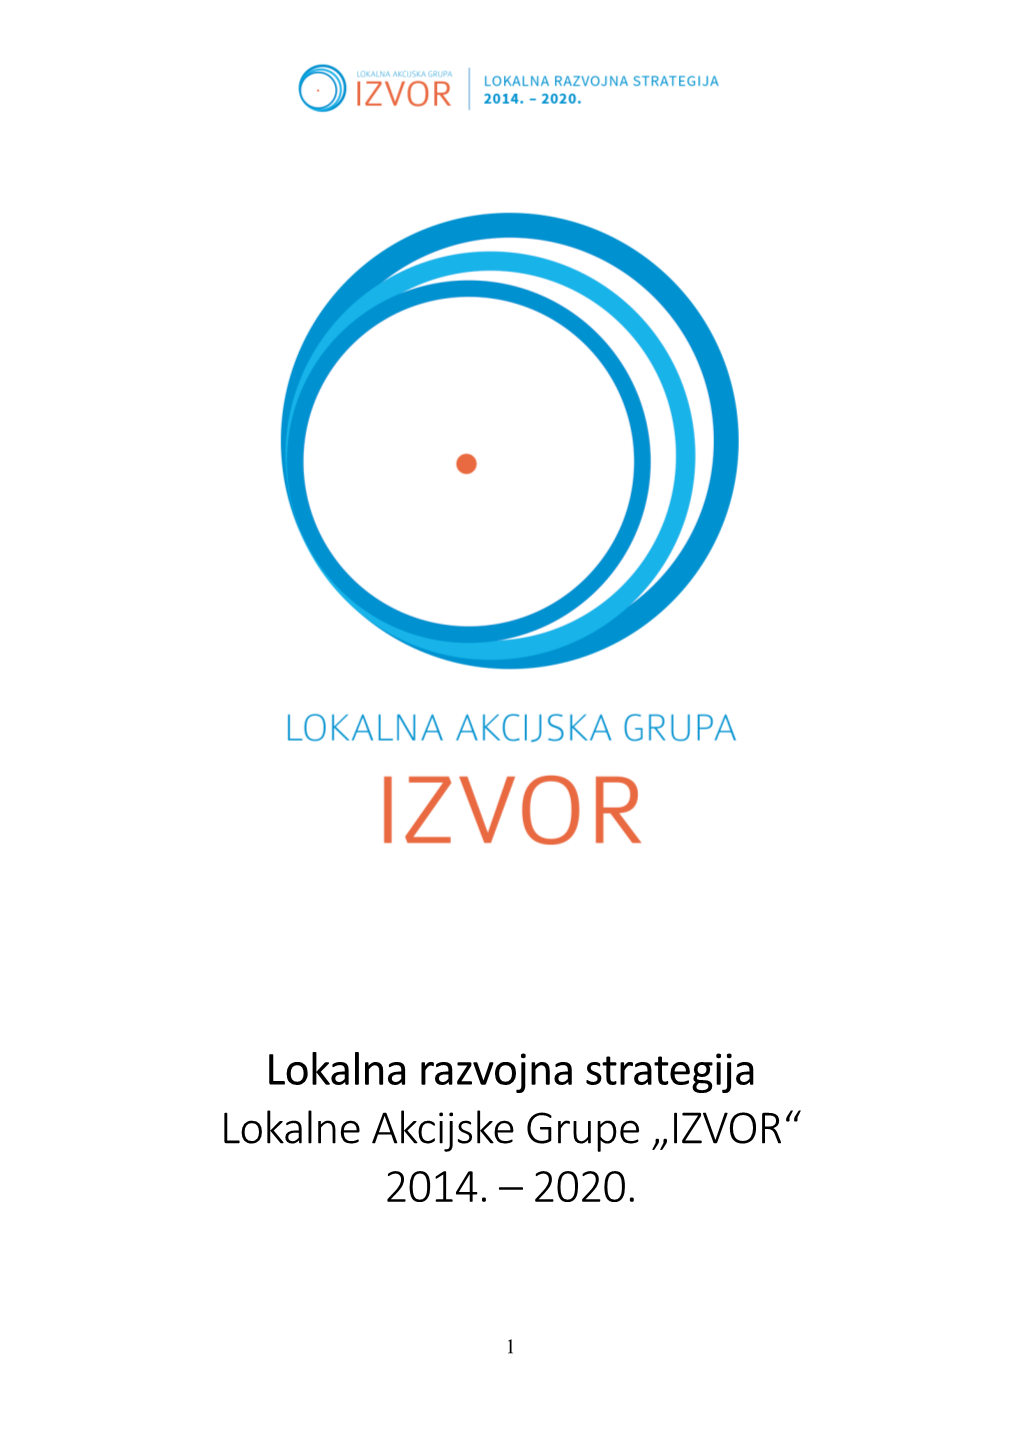 Lokalna Razvojna Strategija Lokalne Akcijske Grupe „IZVOR“ 2014